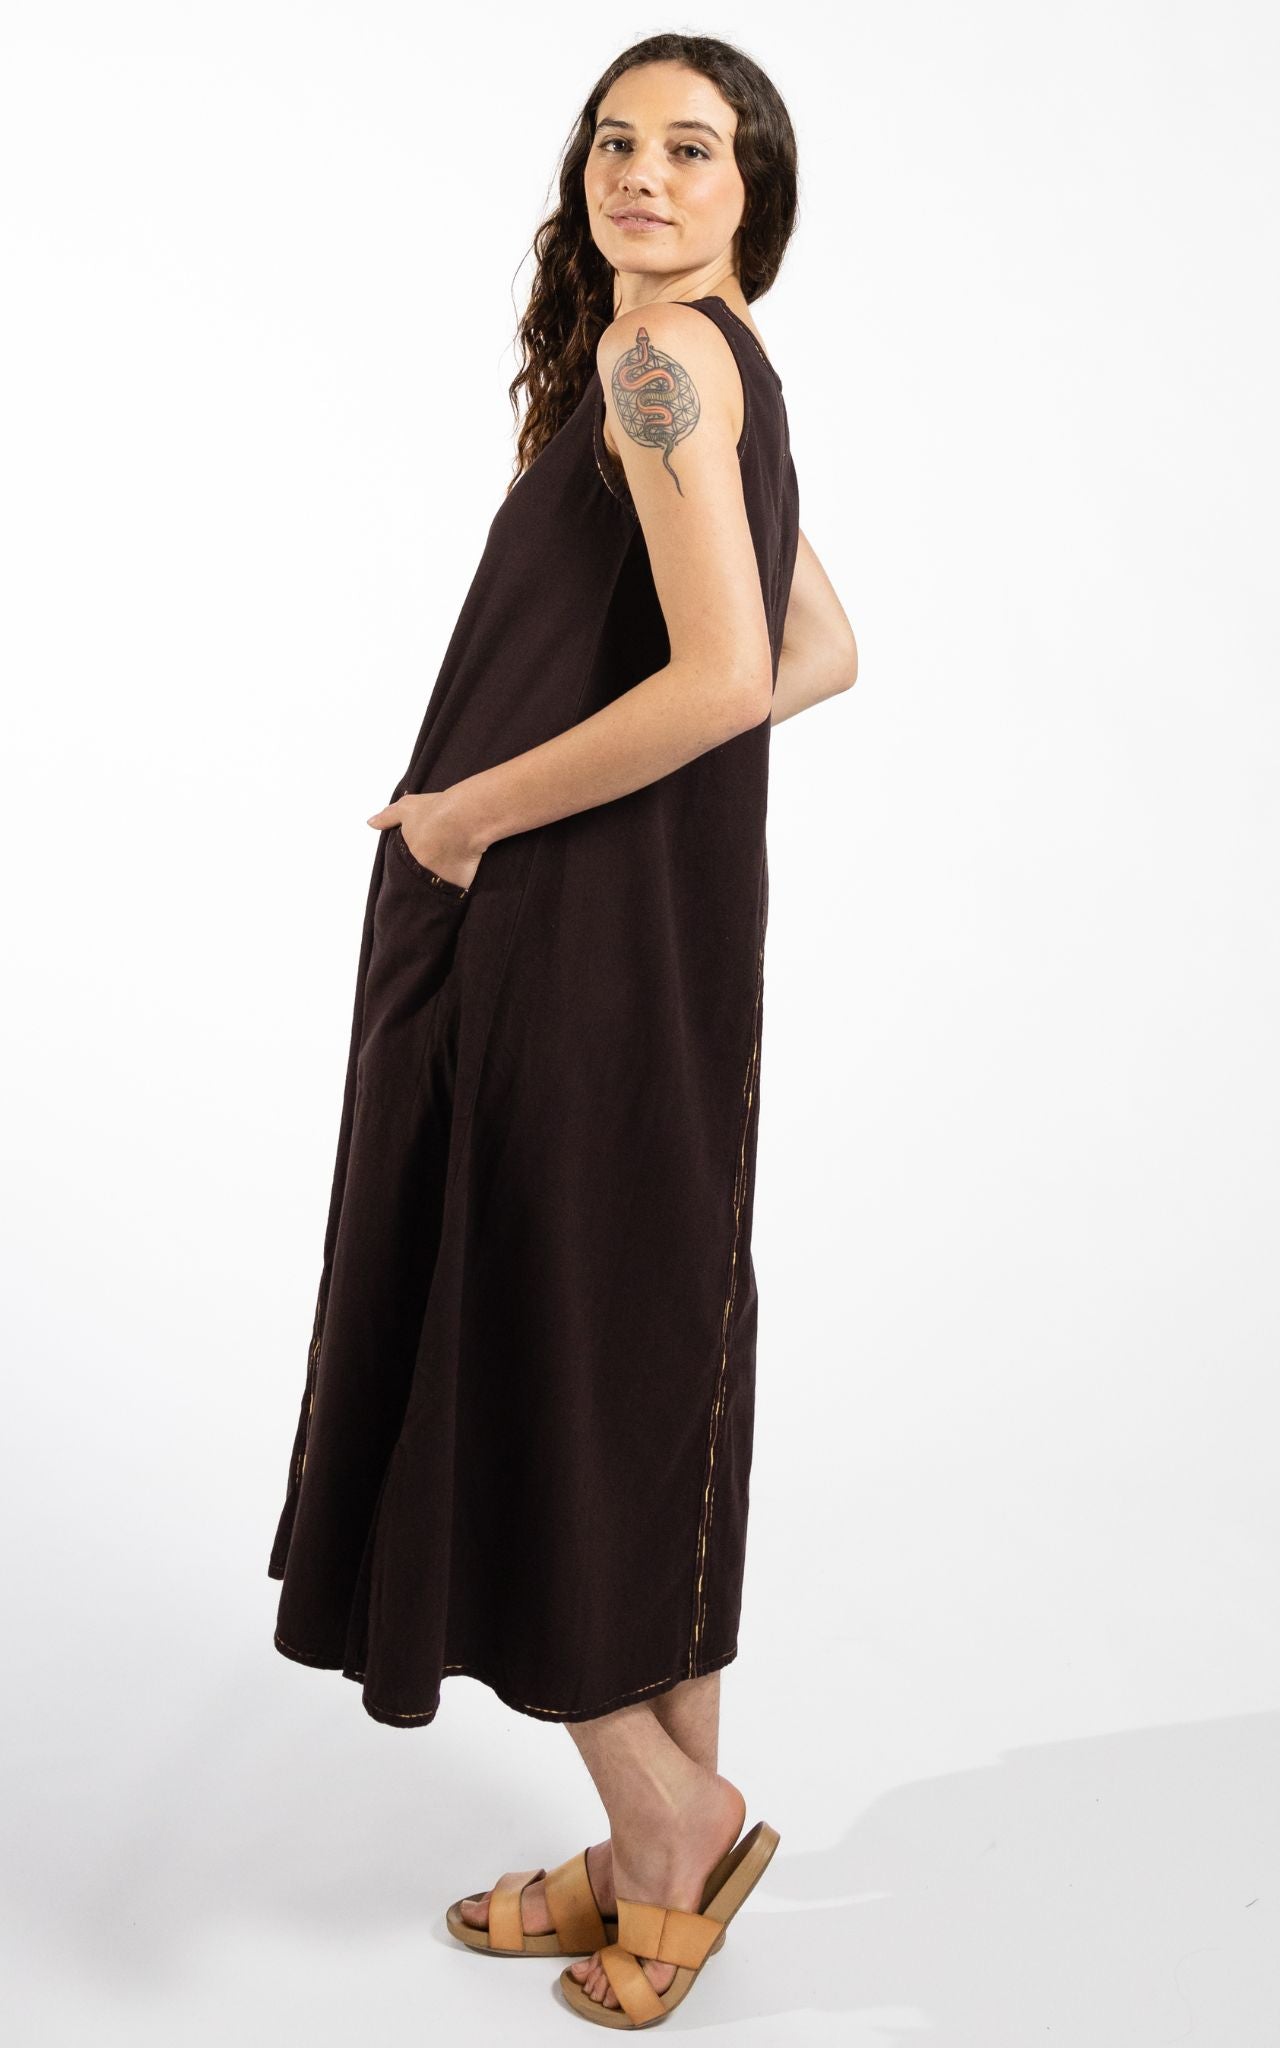 Surya Australia Ethical Cotton 'Calliope' Dress made in Nepal - Chocolate